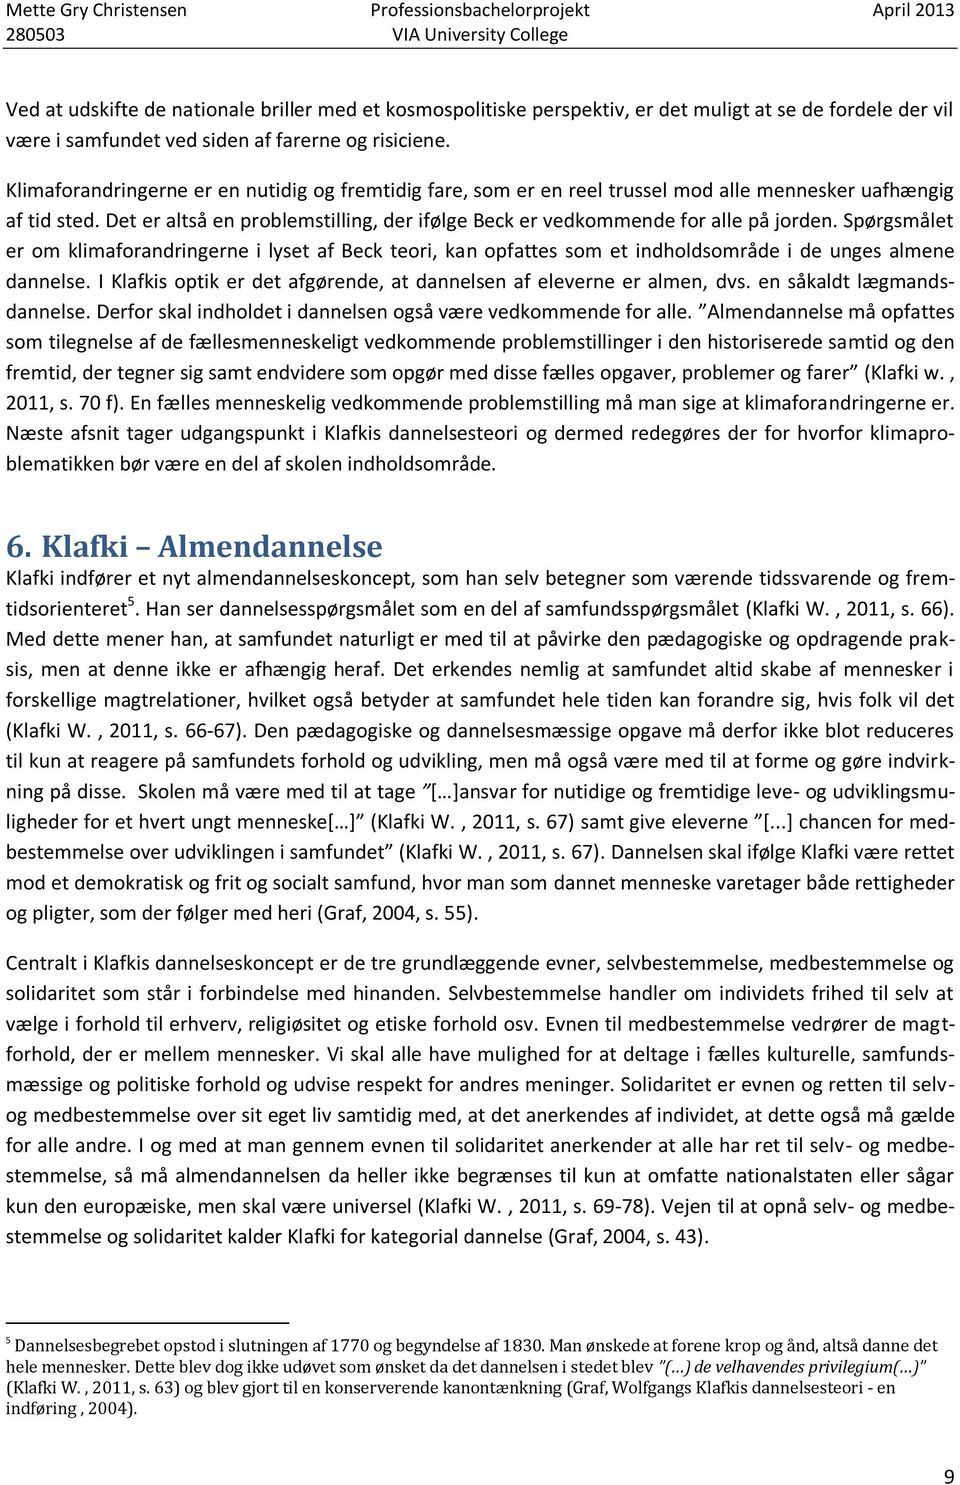 Mette Gry Christensen Professionsbachelorprojekt April VIA University  College - PDF Free Download